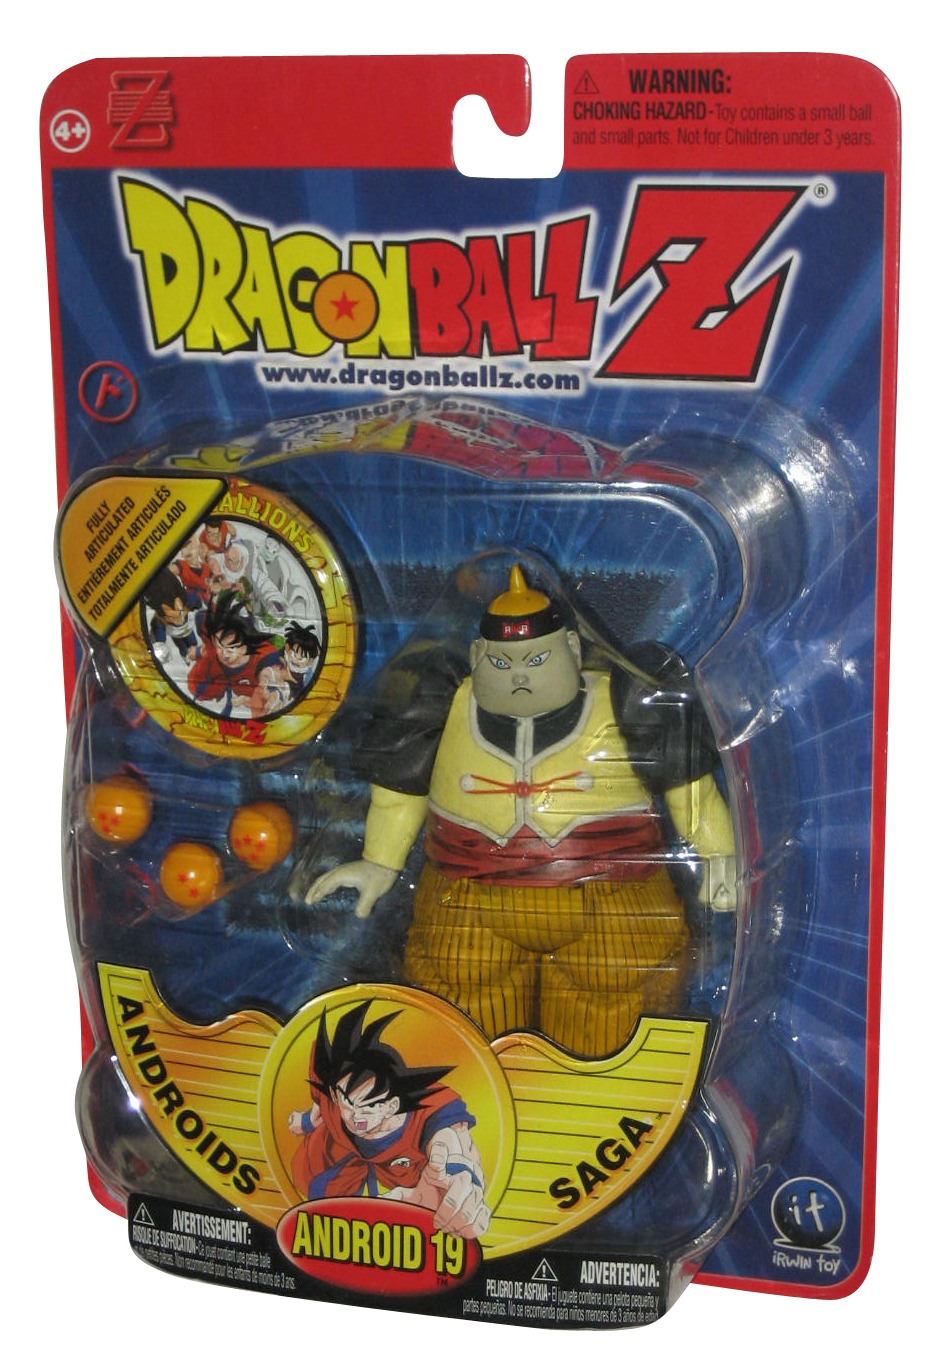 Dragon Ball Z Androids Saga (2001) Irwin Toys Android 19 Action Figure 69545435340 | eBay